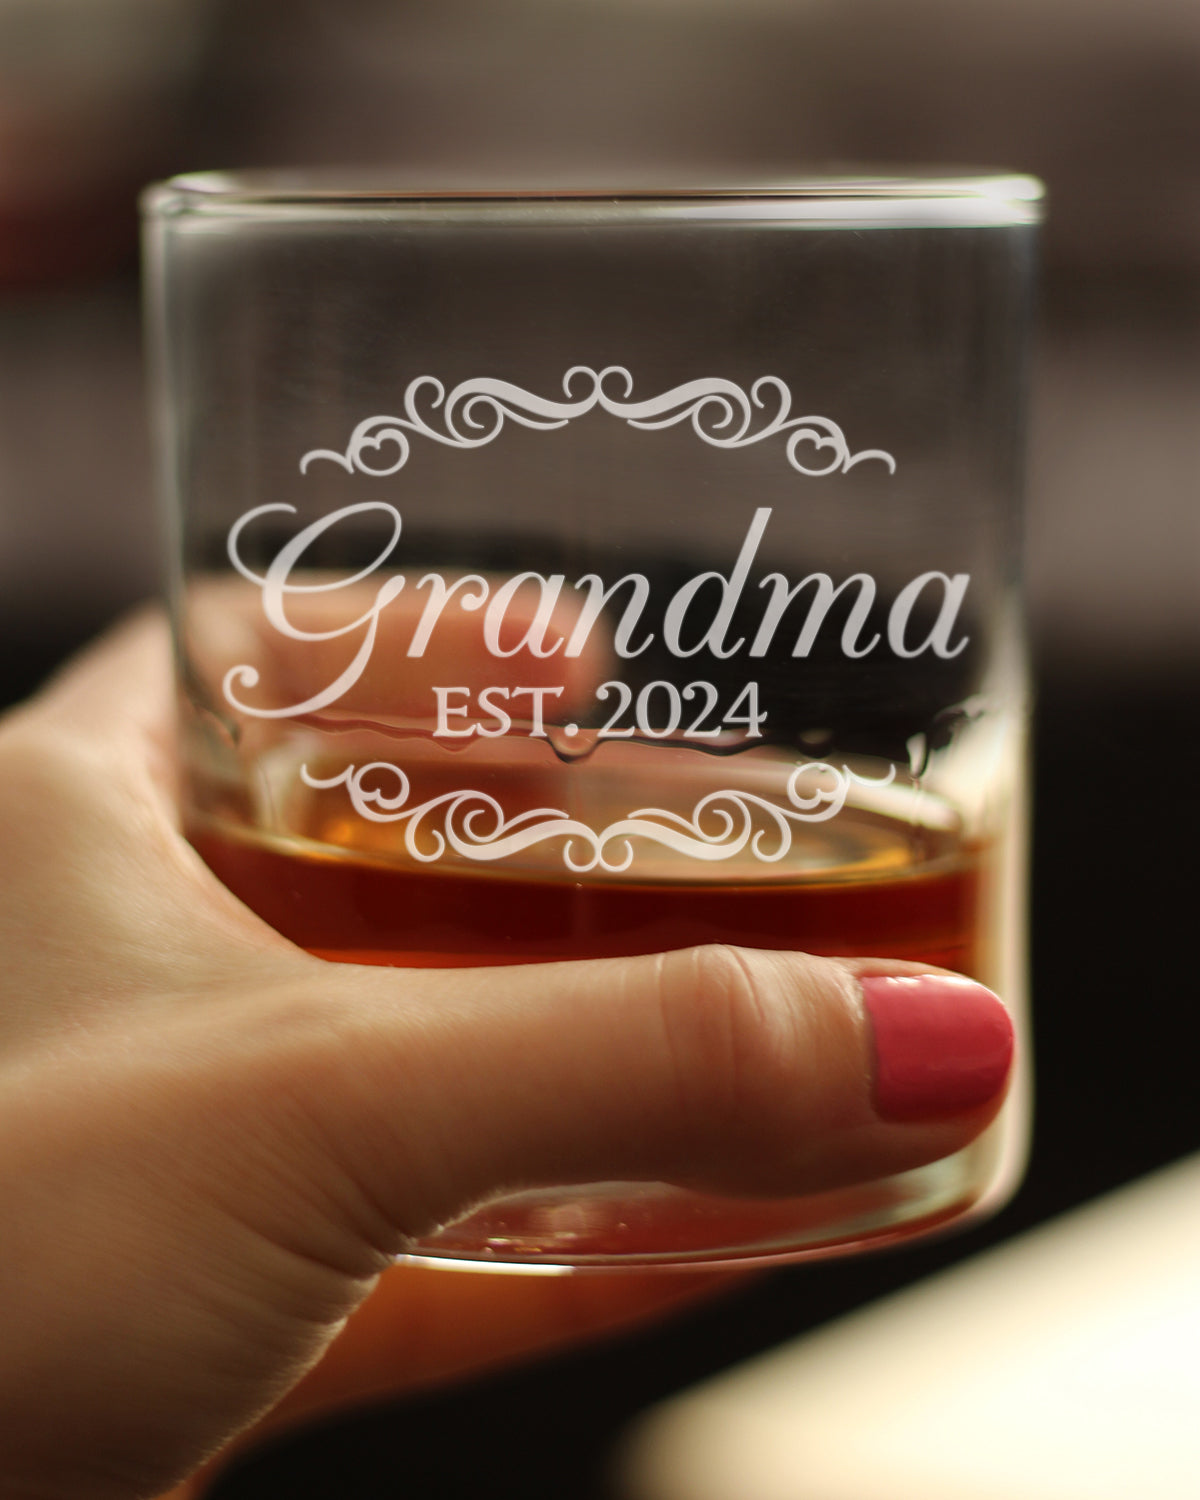 Grandma Est 2024 - New Grandmother Whiskey Rocks Glass Gift for First Time Grandparents - Decorative 10.25 Oz Glasses